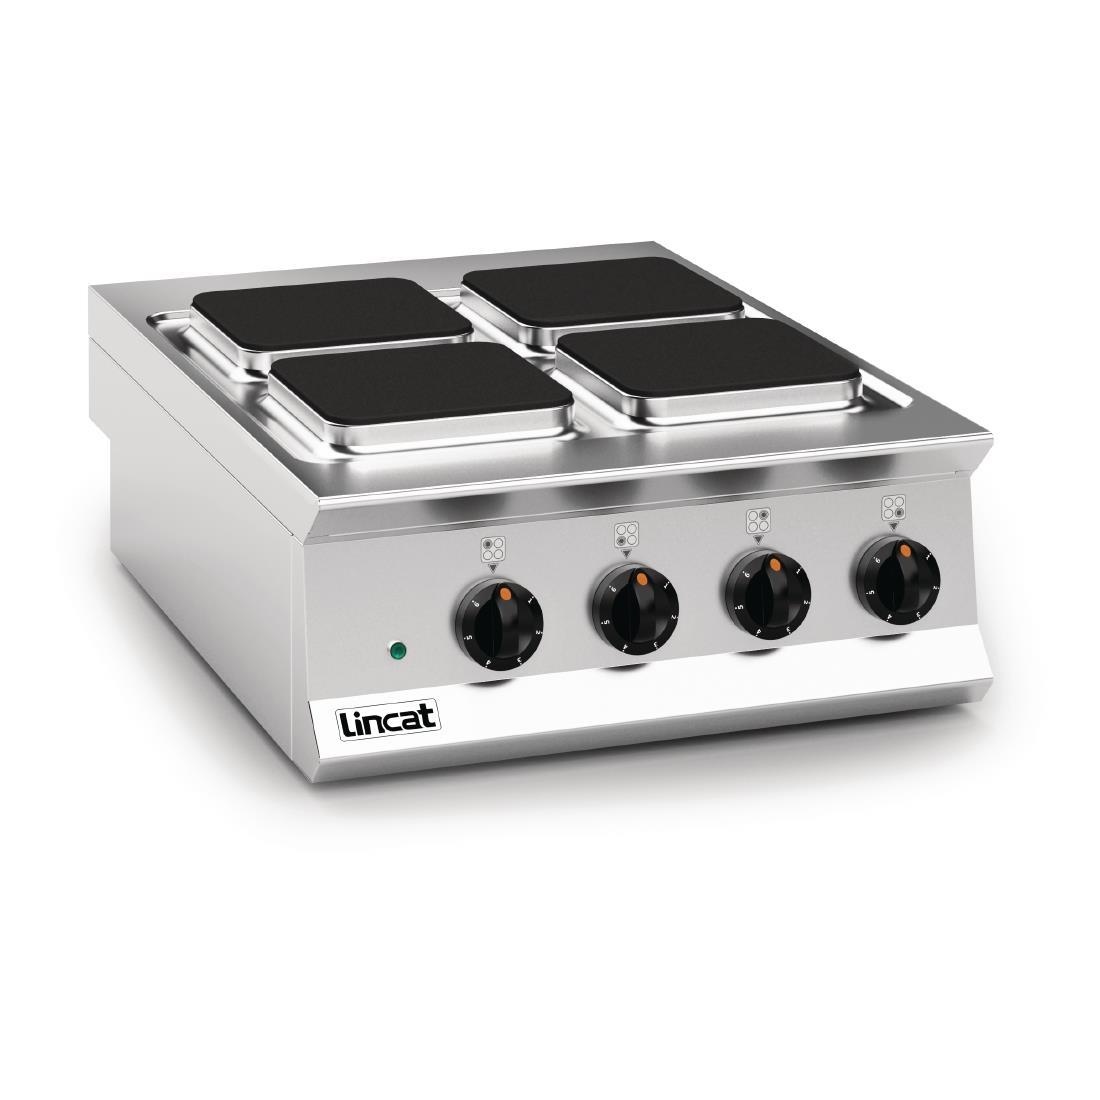 Lincat Opus 800 Electric 4 Plate Boiling Top OE8012 - DM513  - 2